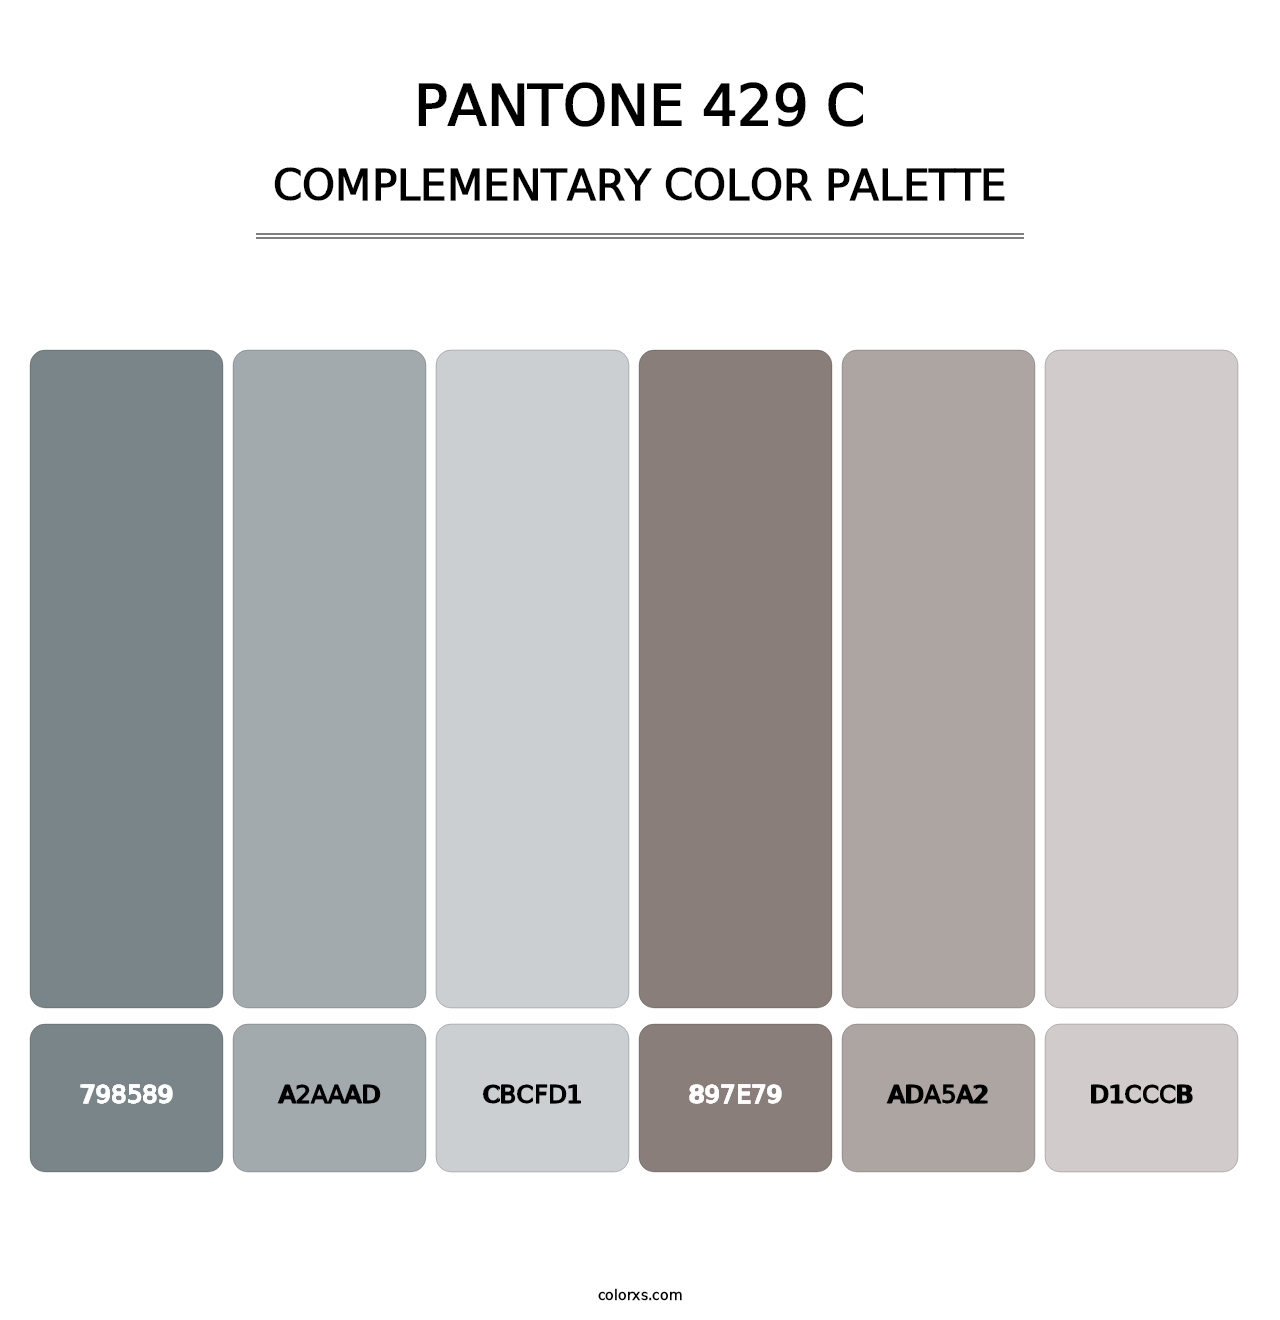 PANTONE 429 C - Complementary Color Palette